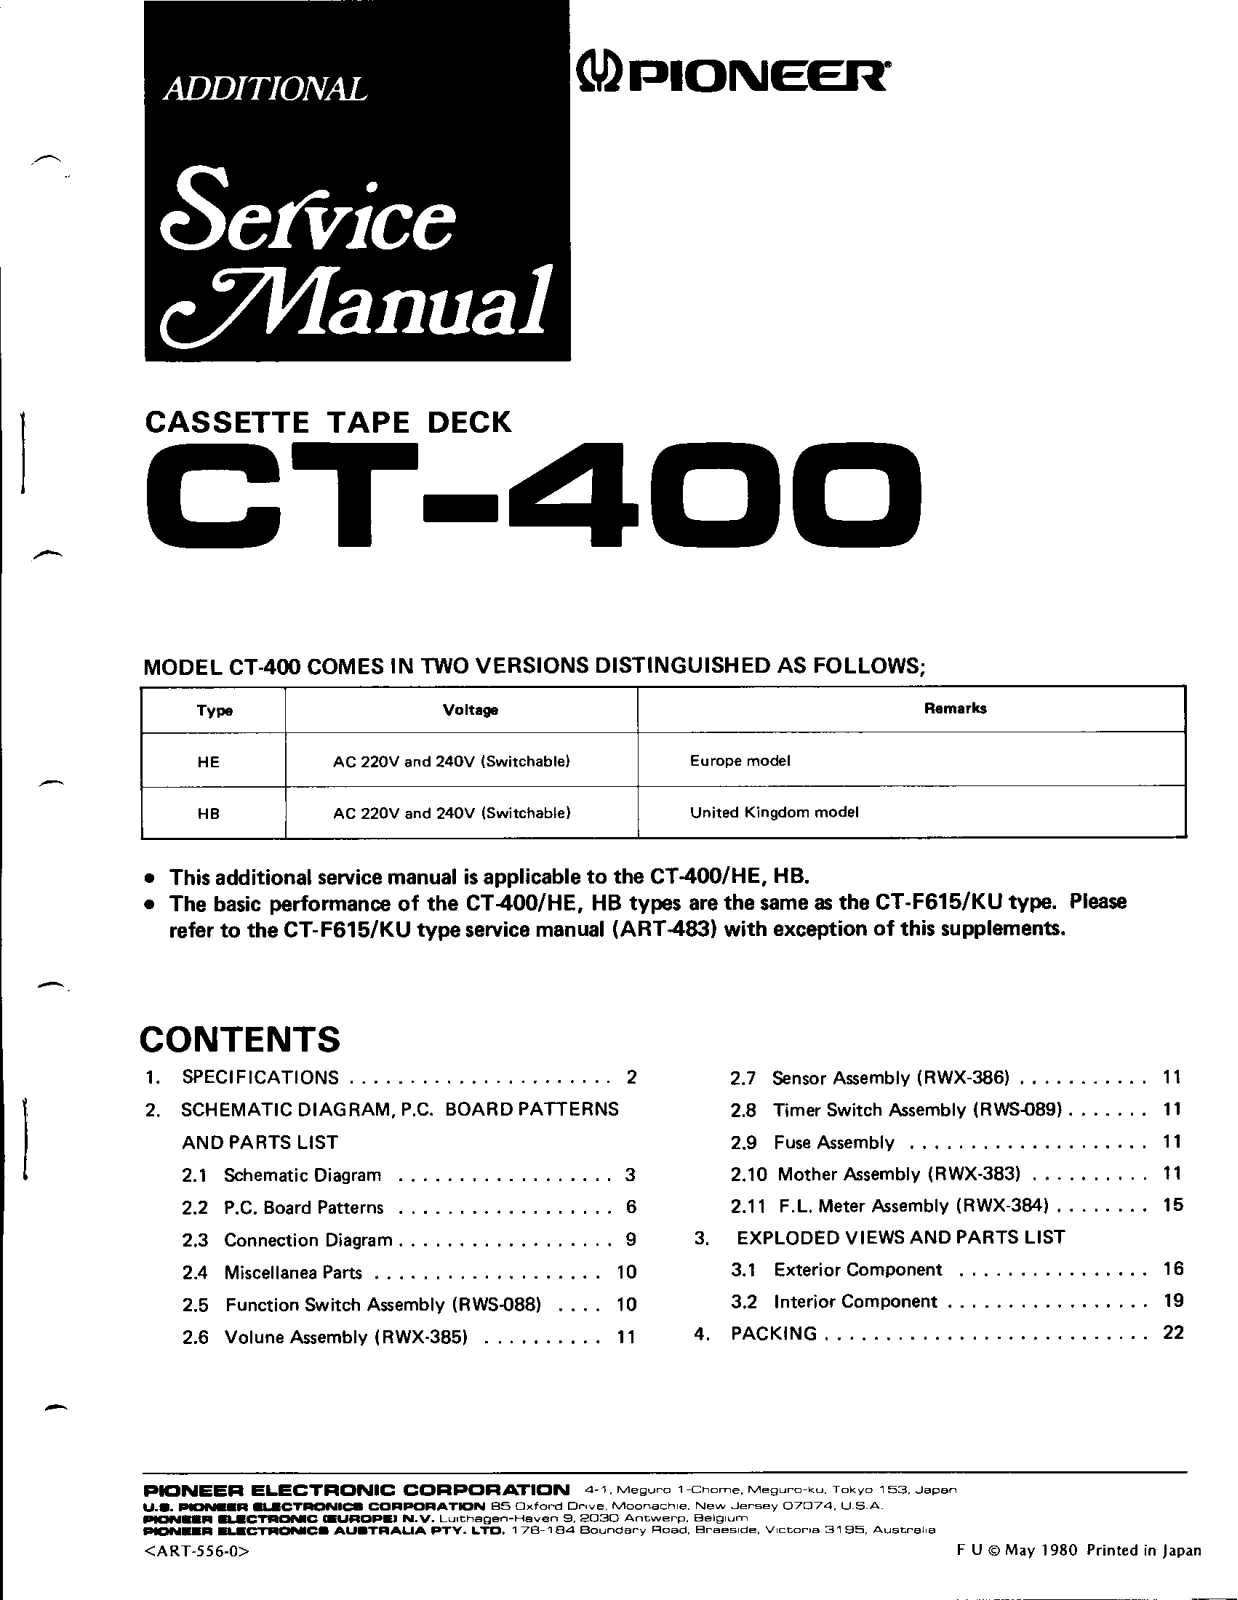 Pioneer CT-400 Service manual